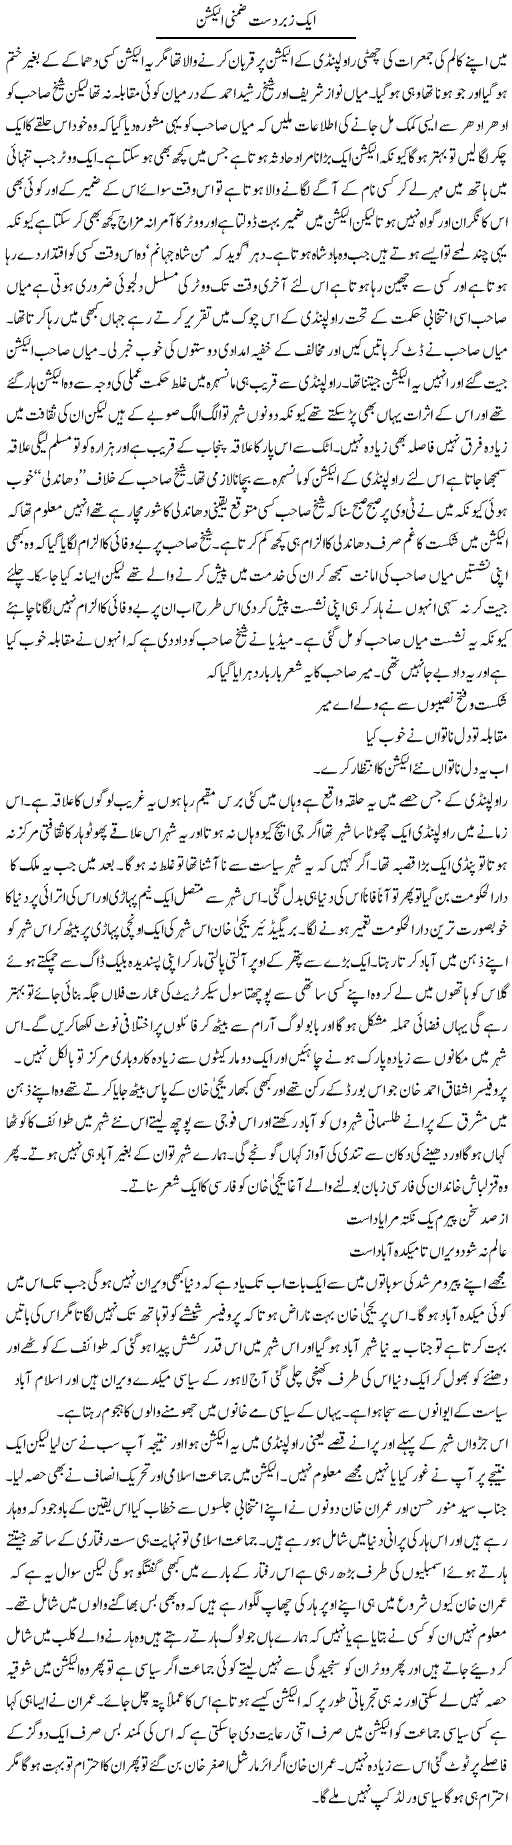 Zabardast Election Express Column Abdul Qadir Hasan 27 Feb 2010